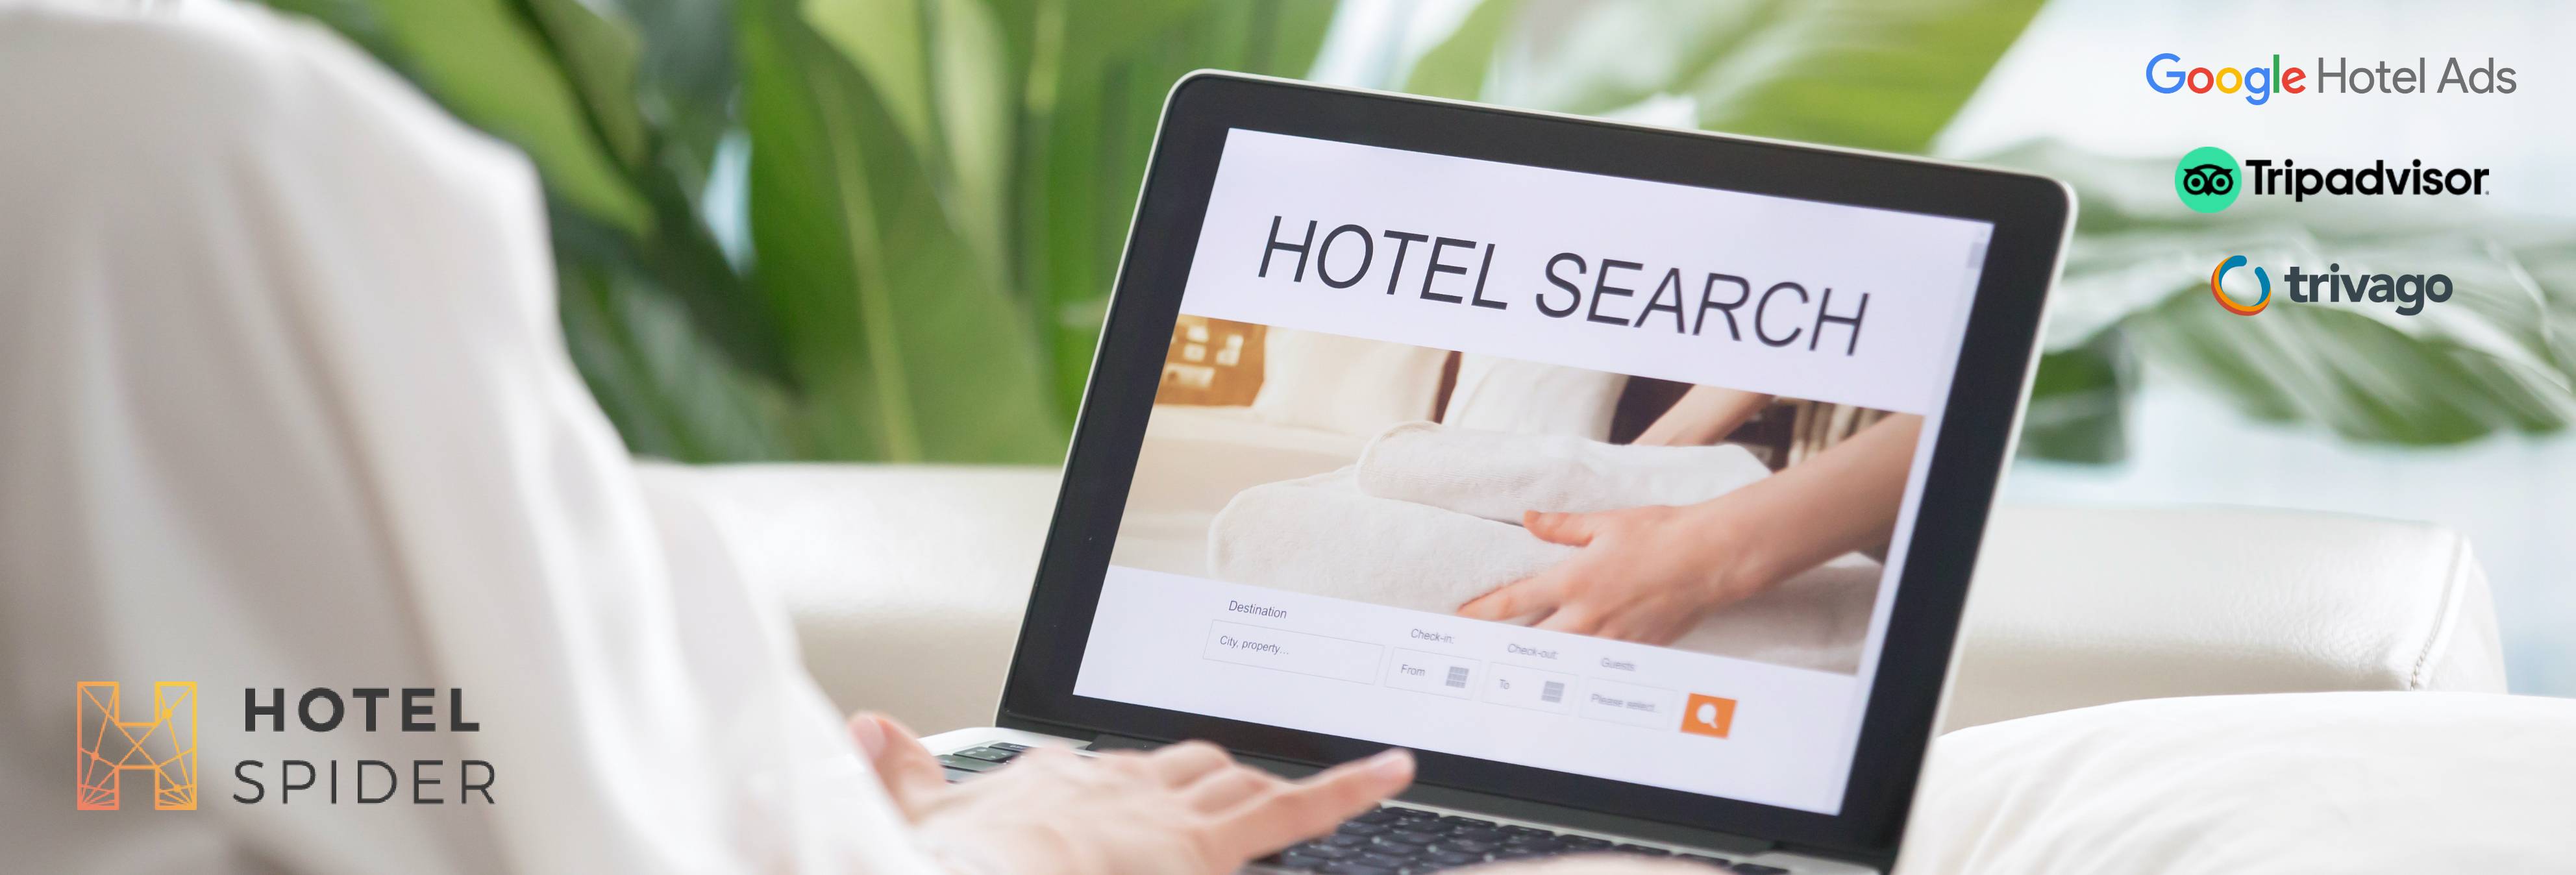 hotel search google